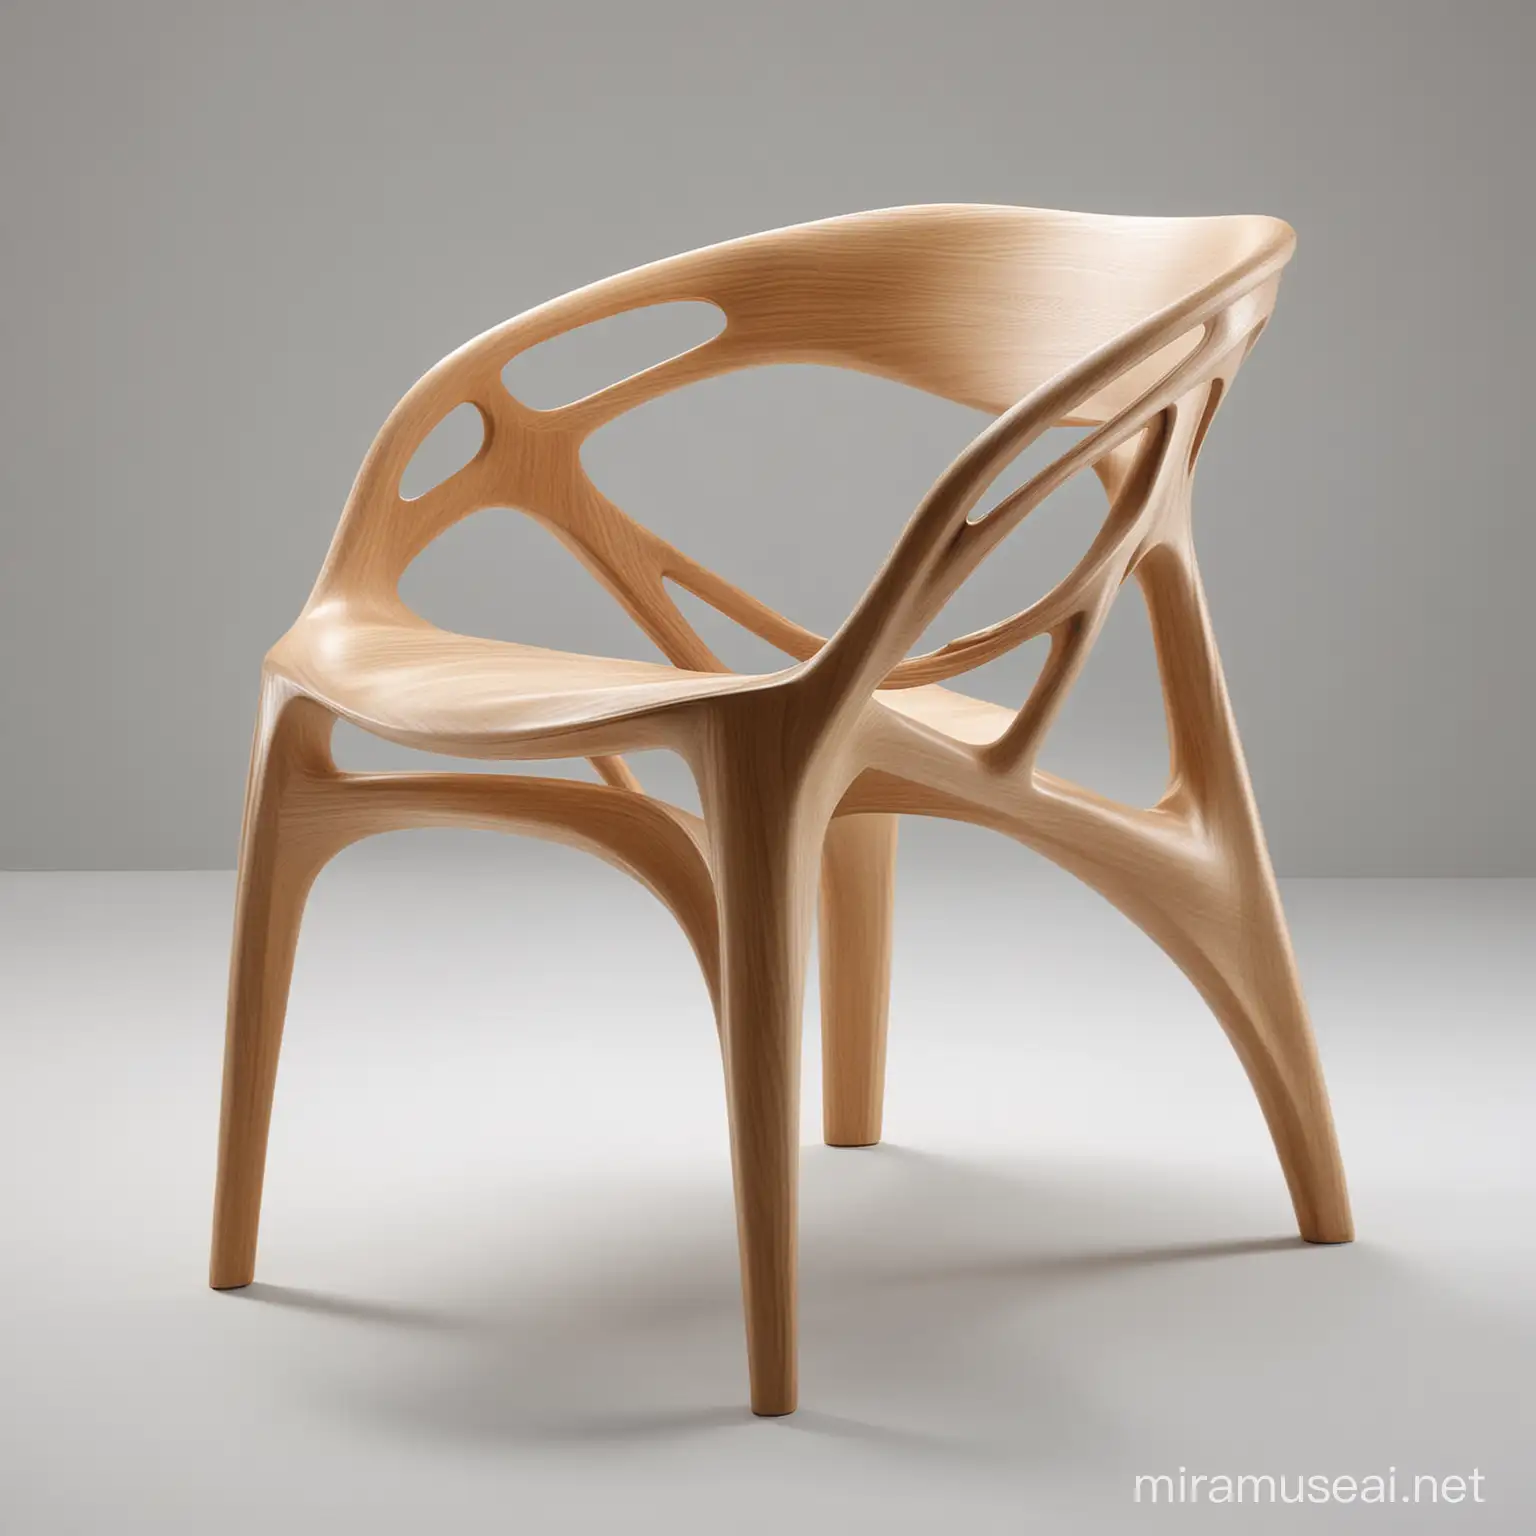 A future wooden arm chair, Zaha Hadid，product design